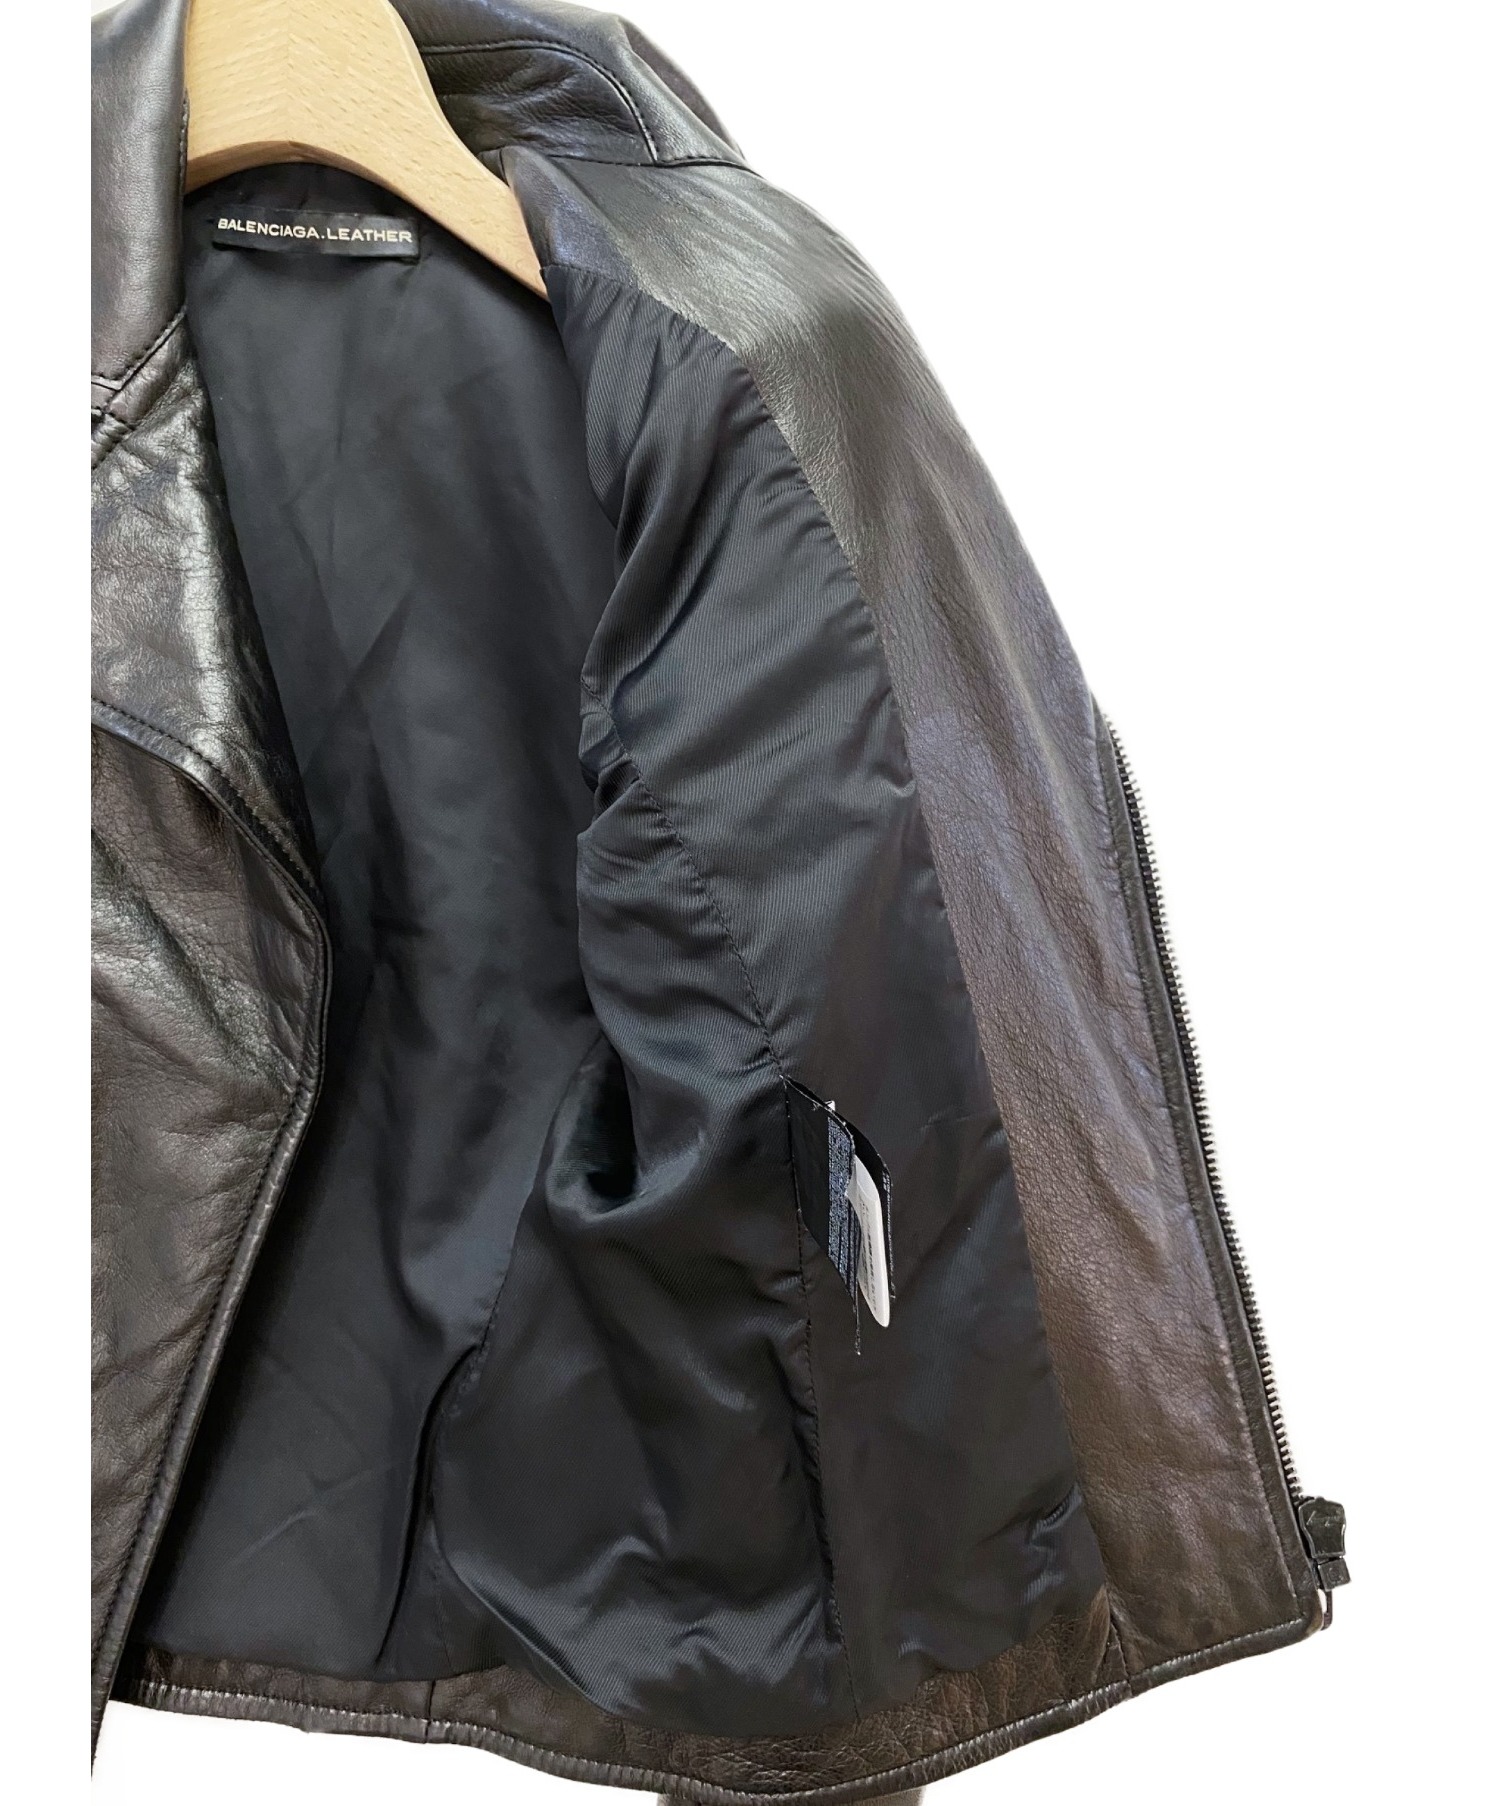 BALENCIAGA (バレンシアガ) レザーライダースジャケット ブラック サイズ:34